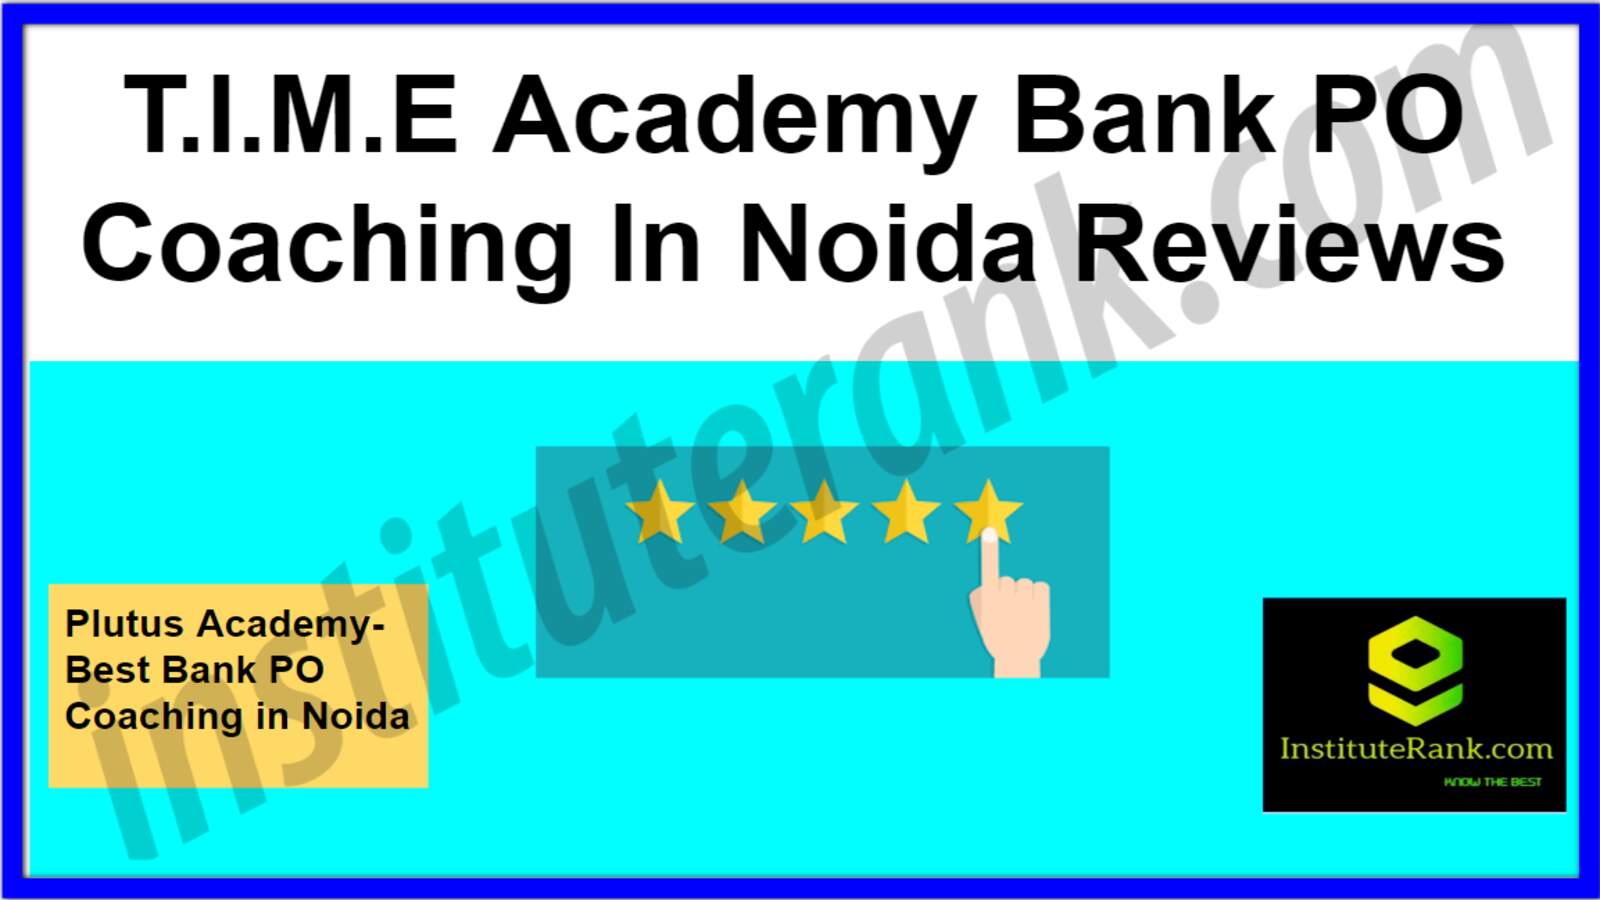 T.I.M.E Academy Bank PO Coaching in Noida Reviews